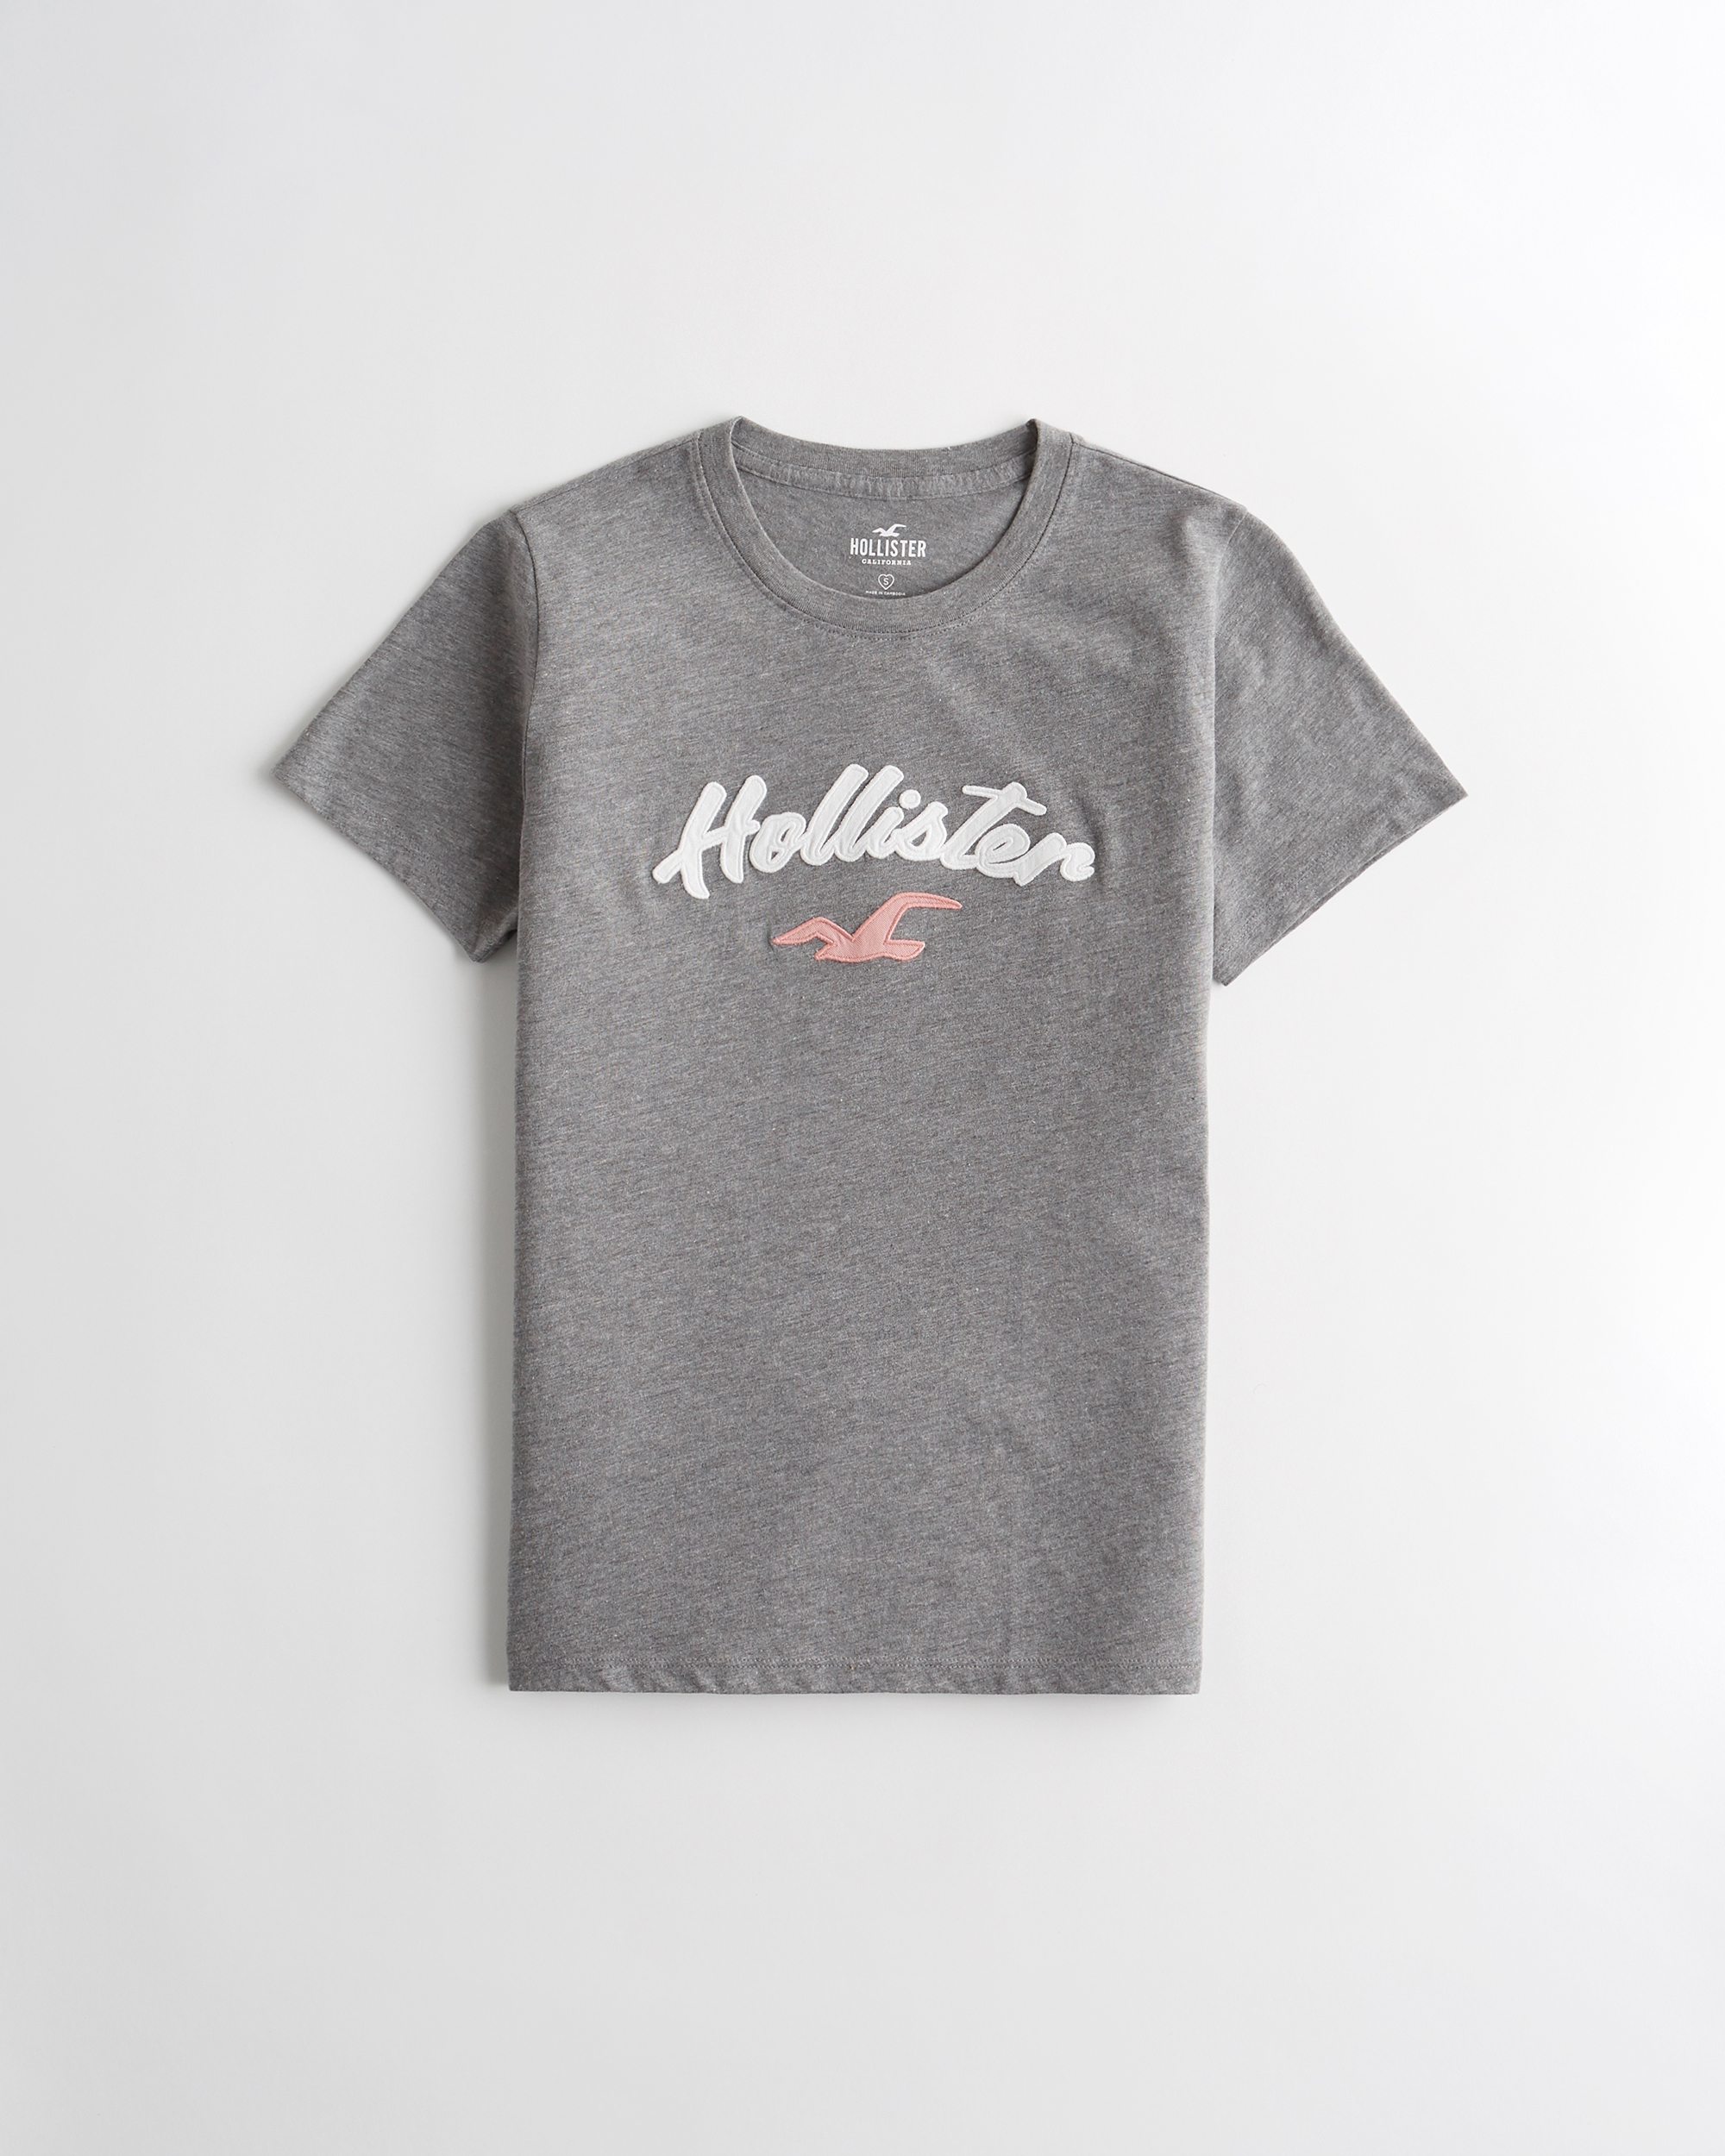 hollister shirts for girls